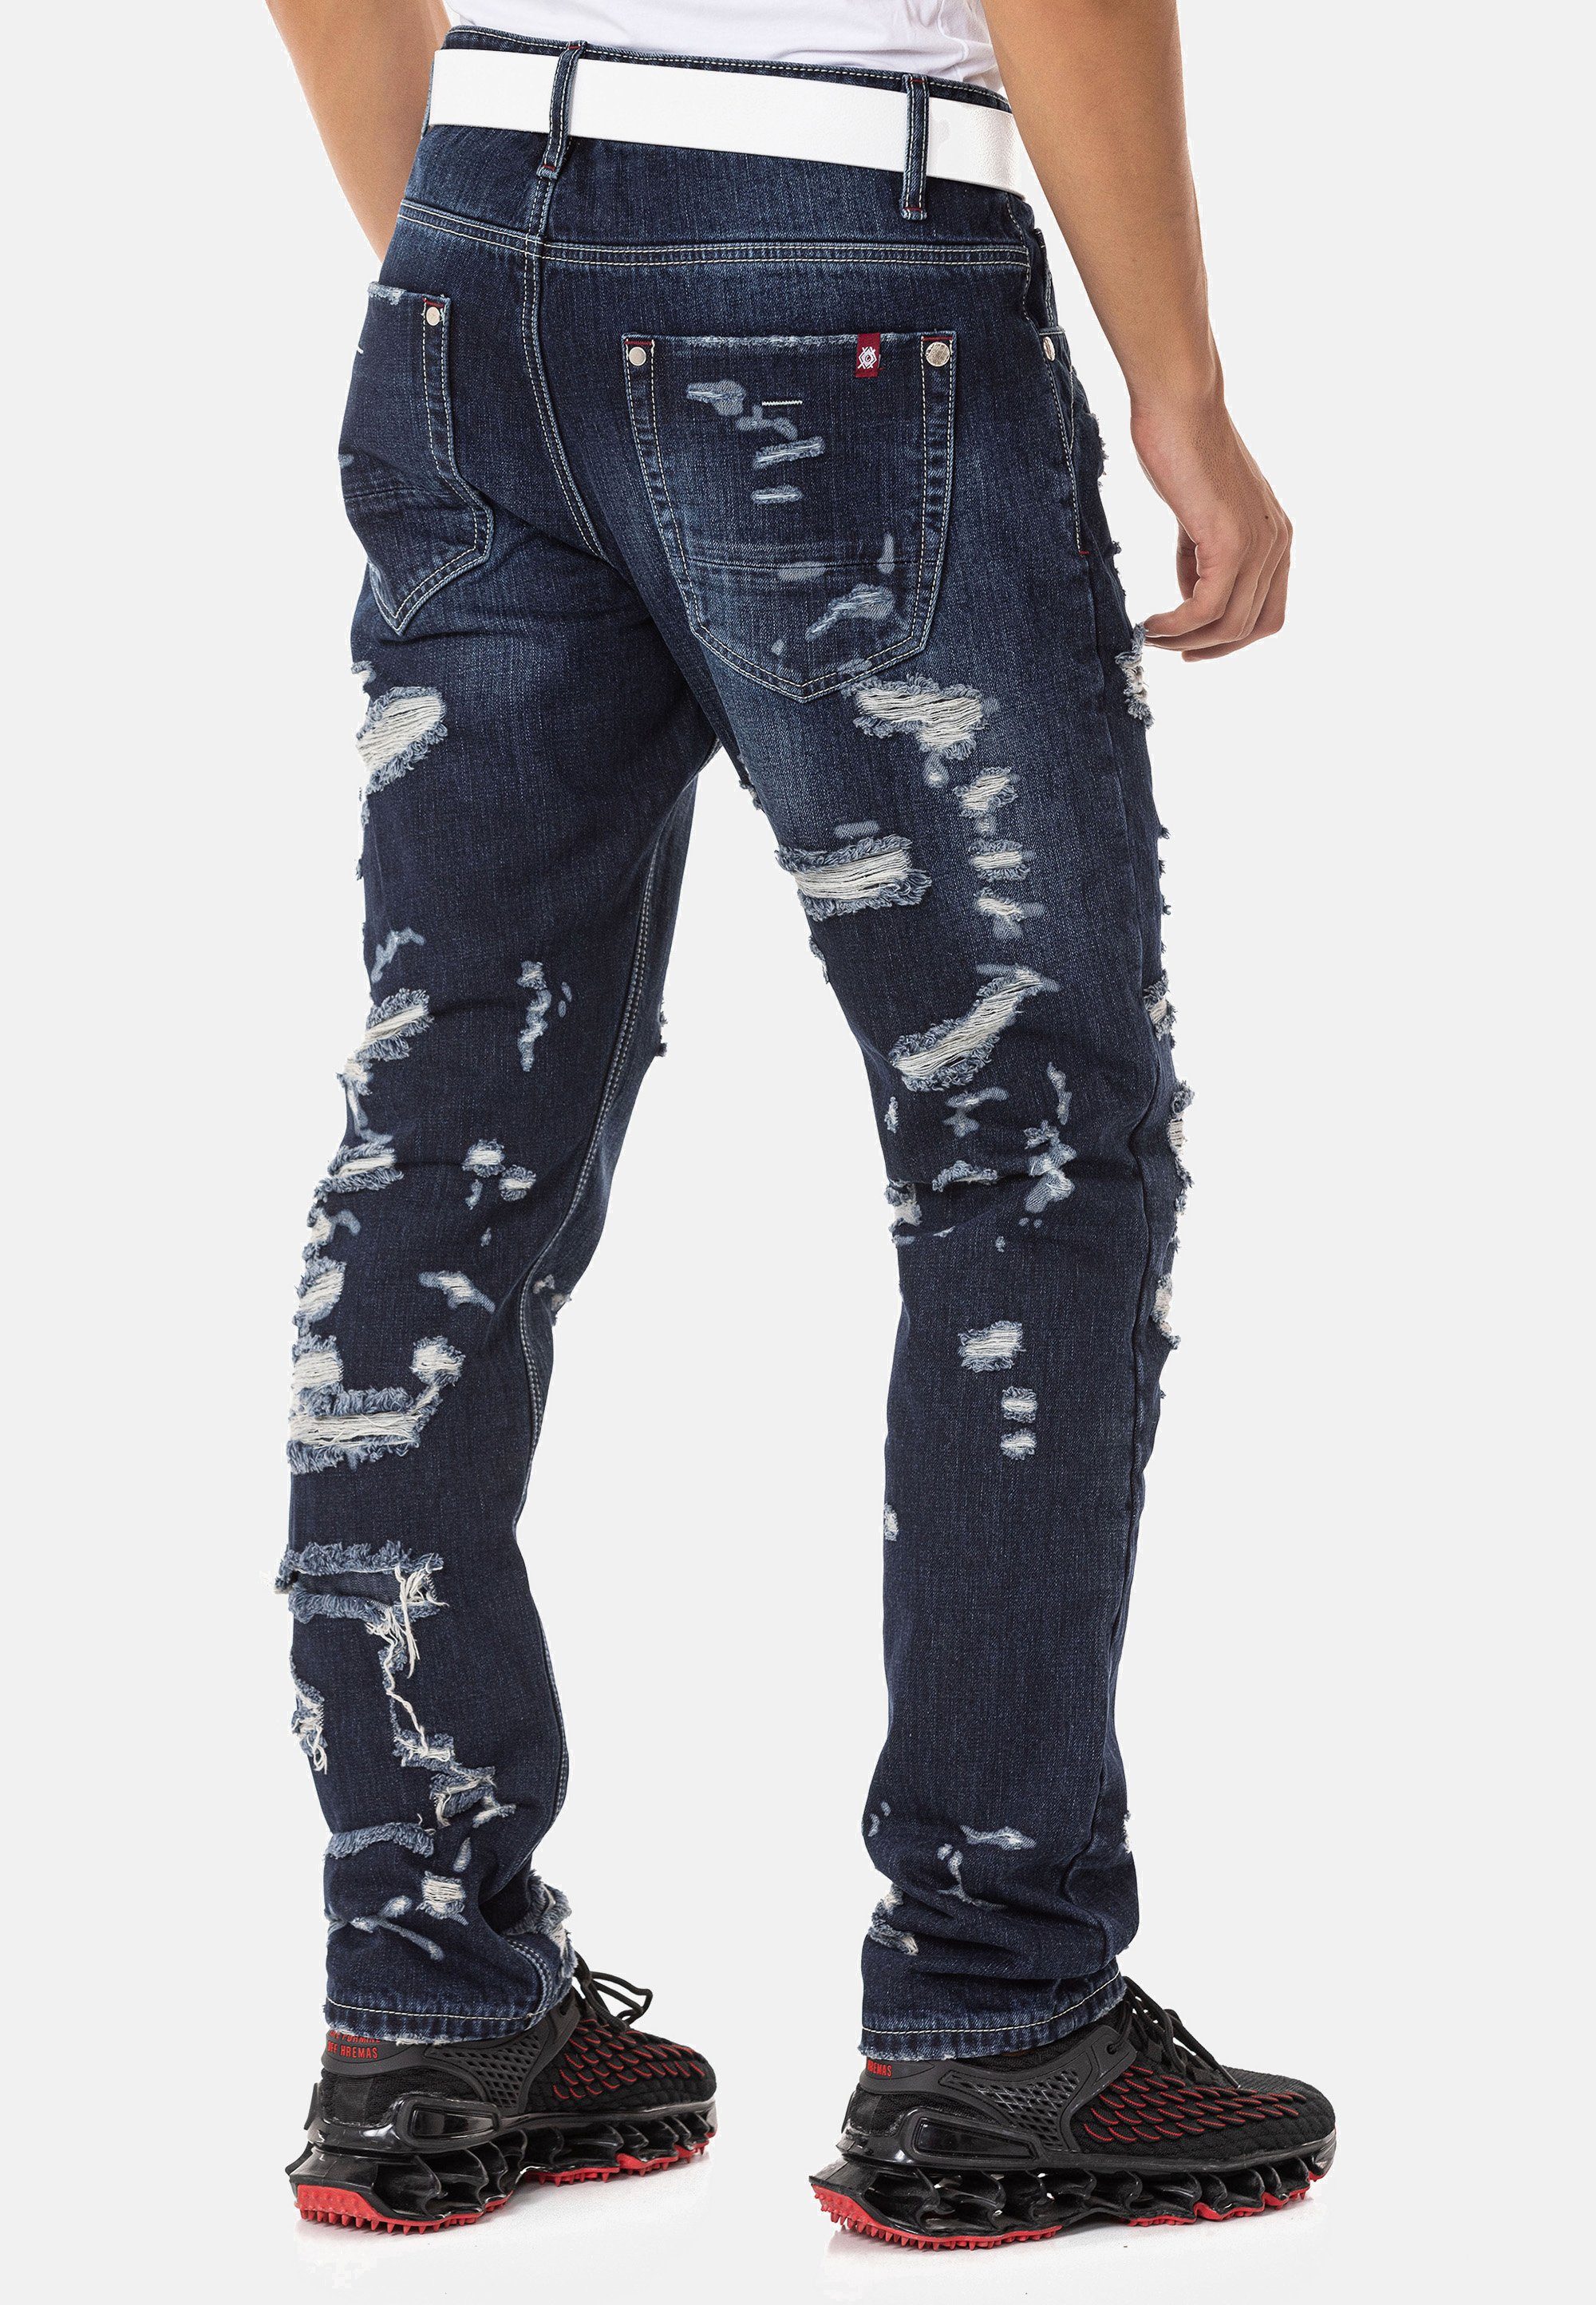 Cipo & coolen Jeans Destroyed-Look im Baxx dunkelblau Bequeme